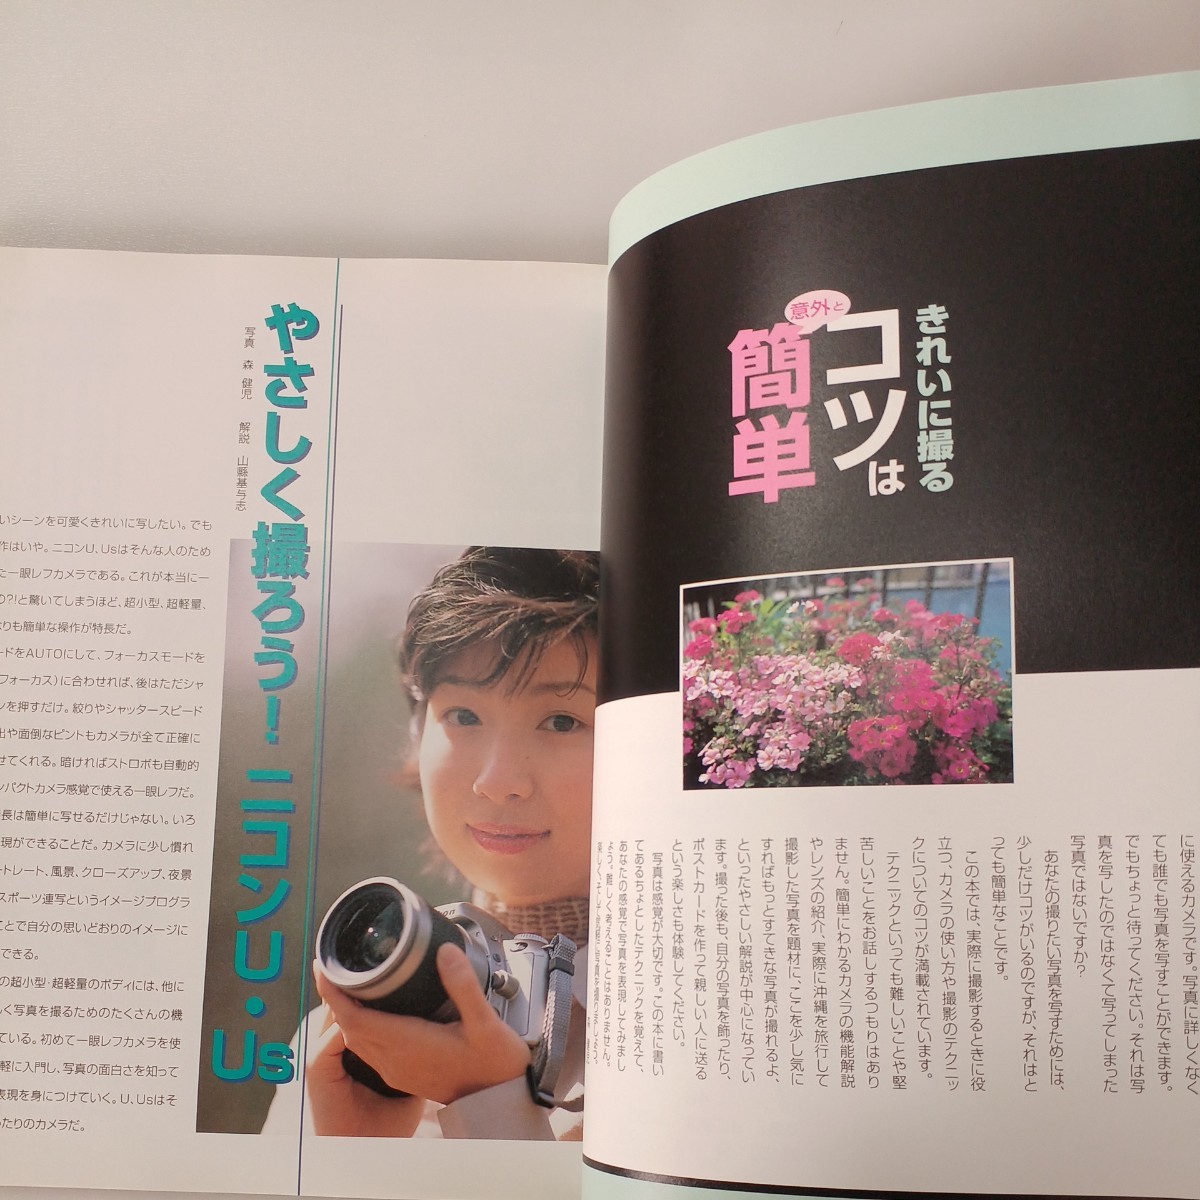 zaa-535♪ニコンU・Us・F80の使い方 ニコン一眼レフ入門 日本カメラ社 (2004/4/1)ニコンF80のことよく知っておこう